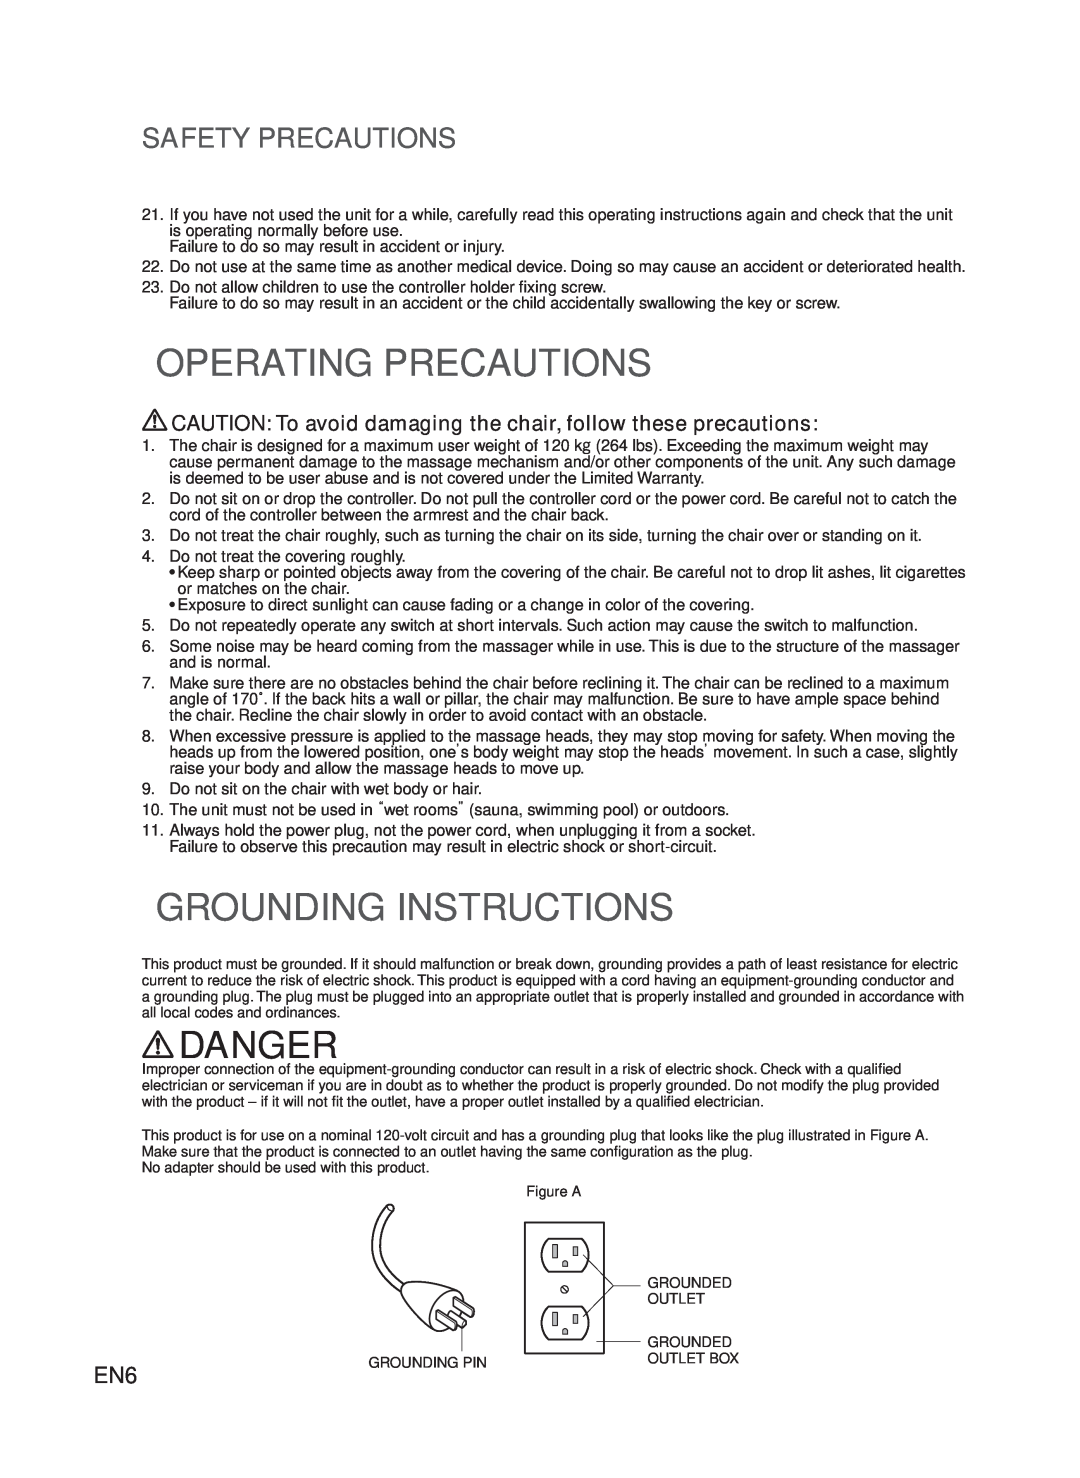 Panasonic EP-MA73 manual Operating Precautions, Grounding Instructions, Danger, Safety Precautions 